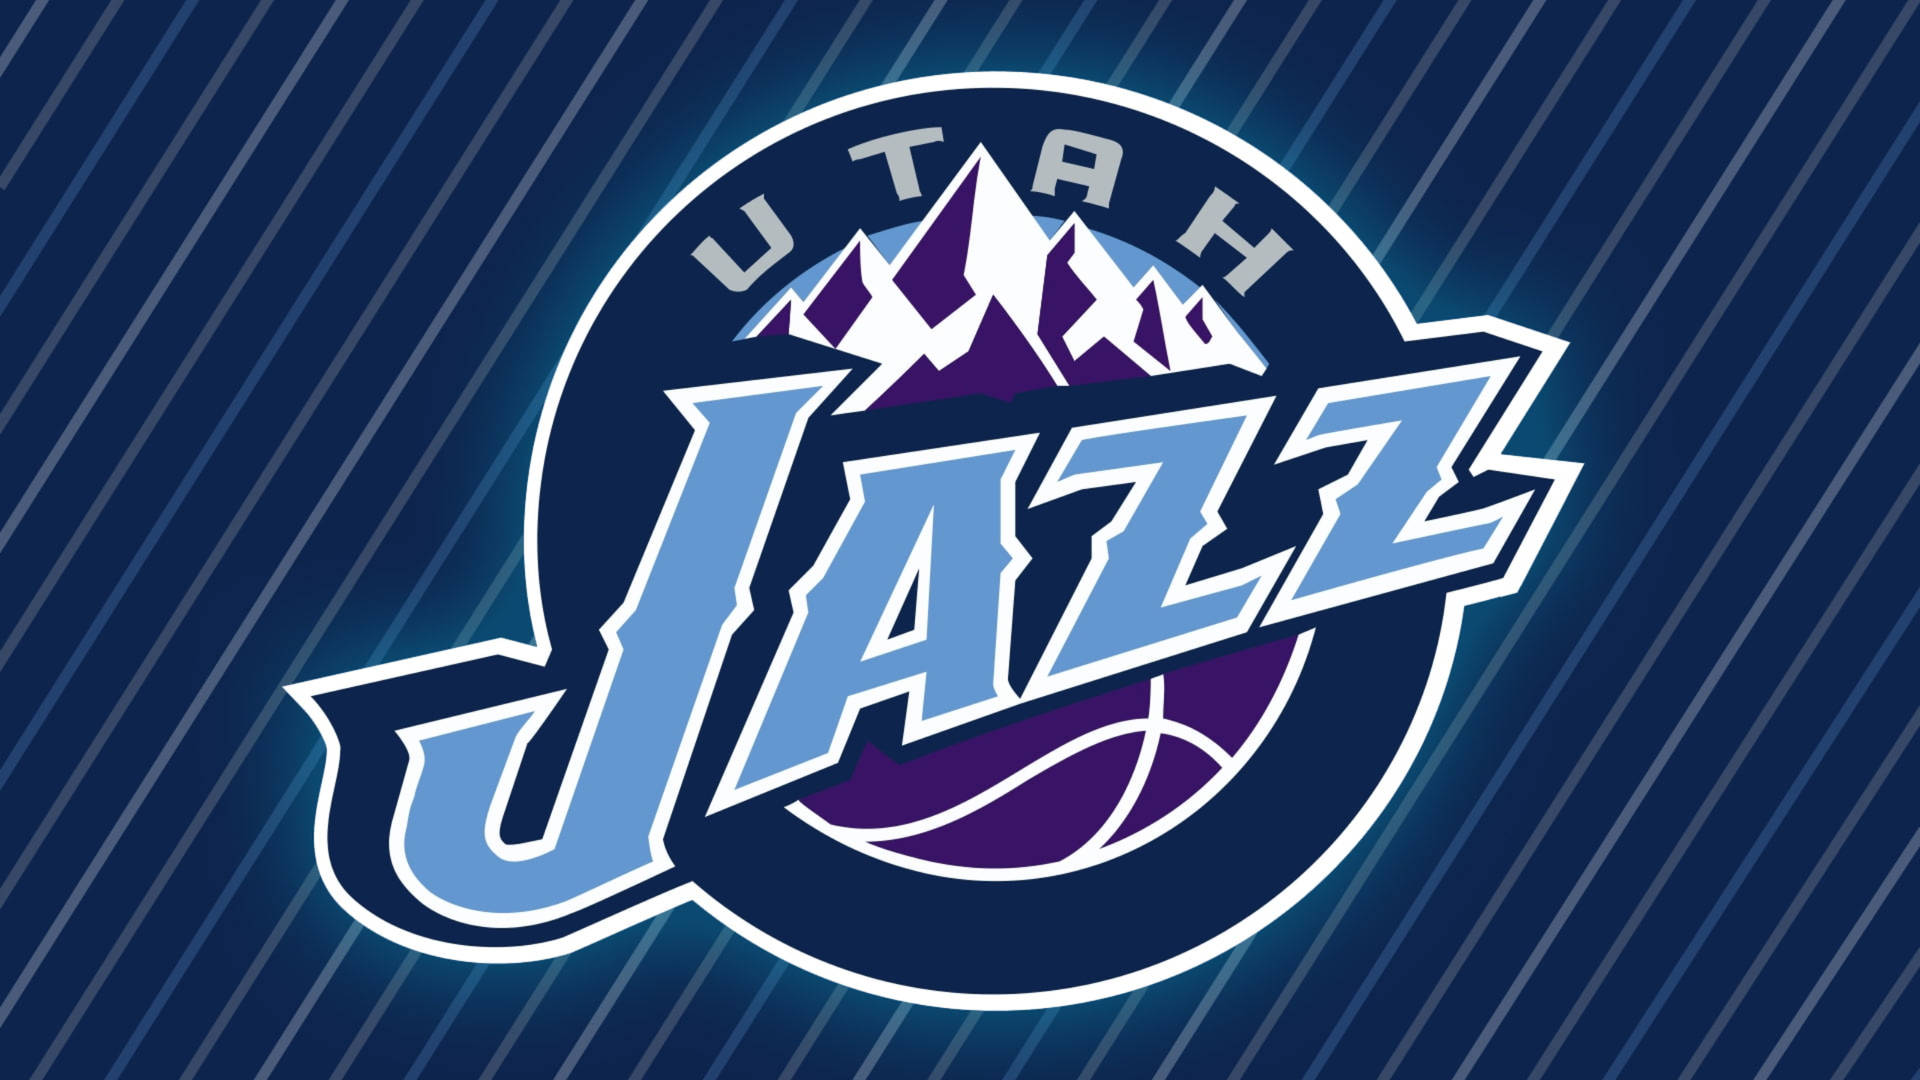 Utah Jazz In Blue Stripes Wallpaper